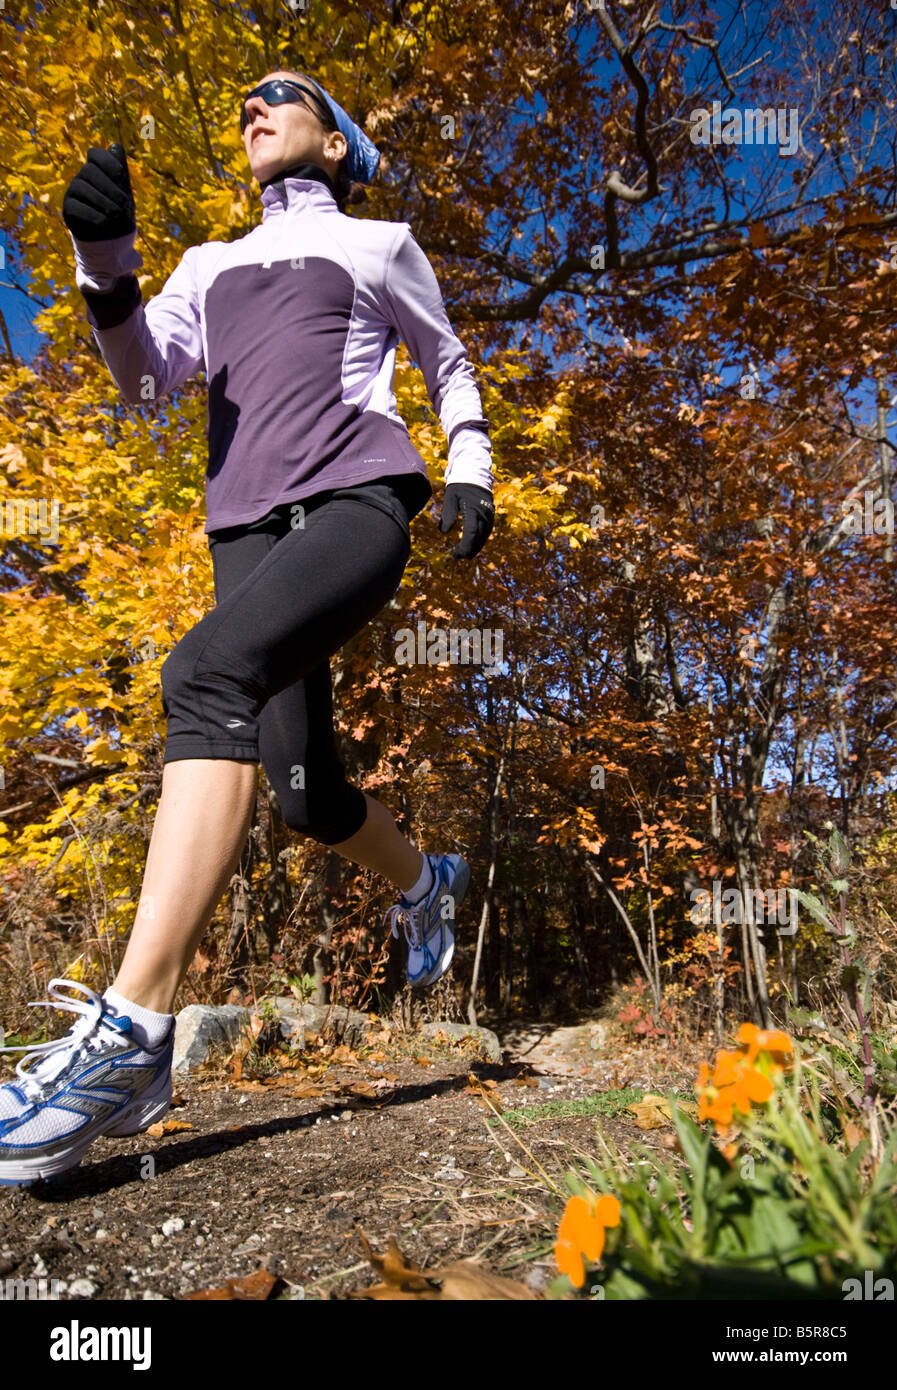 Пробежка весной. Спорт осенью. Осенний спорт. Осенняя пробежка. Одежда для бега на улице.